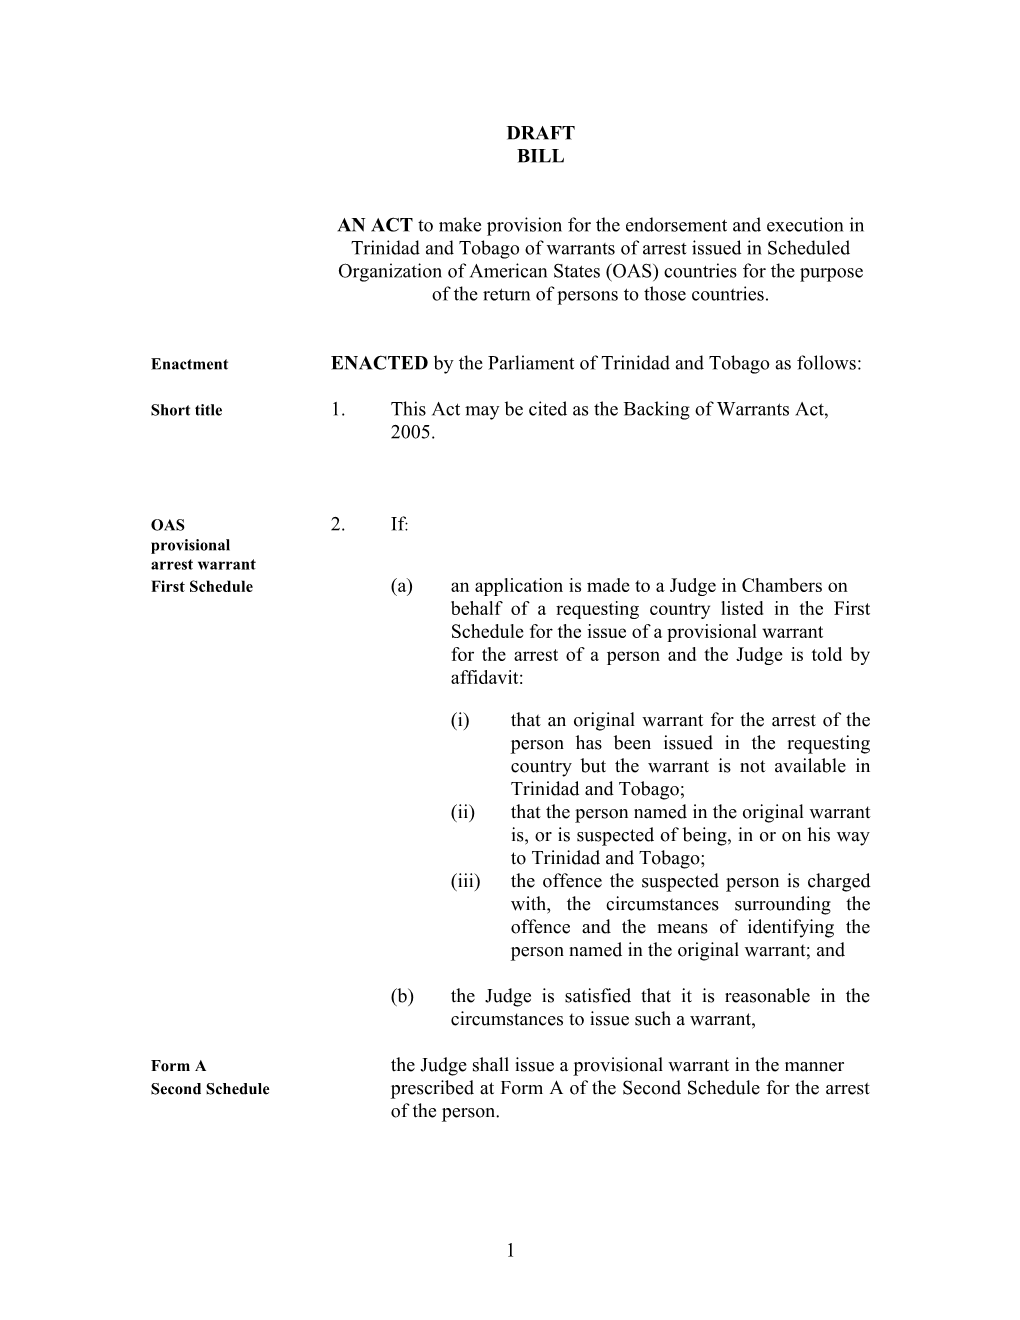 Enactmentenacted by the Parliament of Trinidad and Tobago As Follows